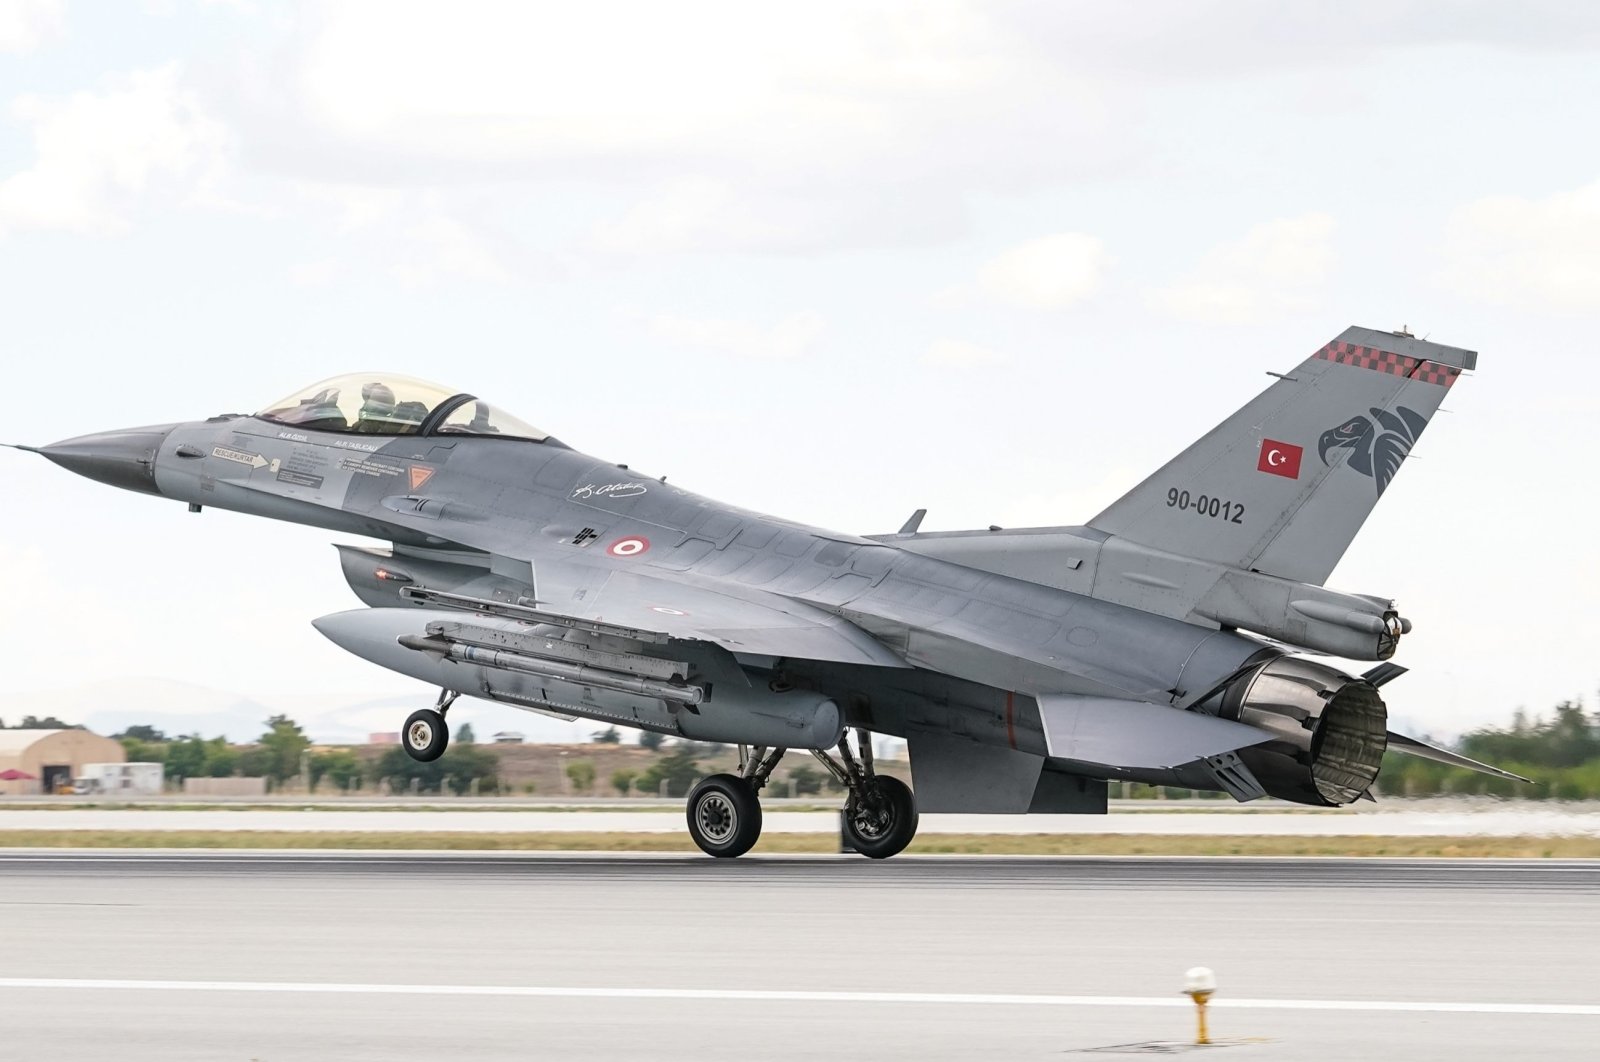 A Turkish military fighter jet lands at an airport in Konya, central Türkiye, June 30, 2022. (Shutterstock Photo)